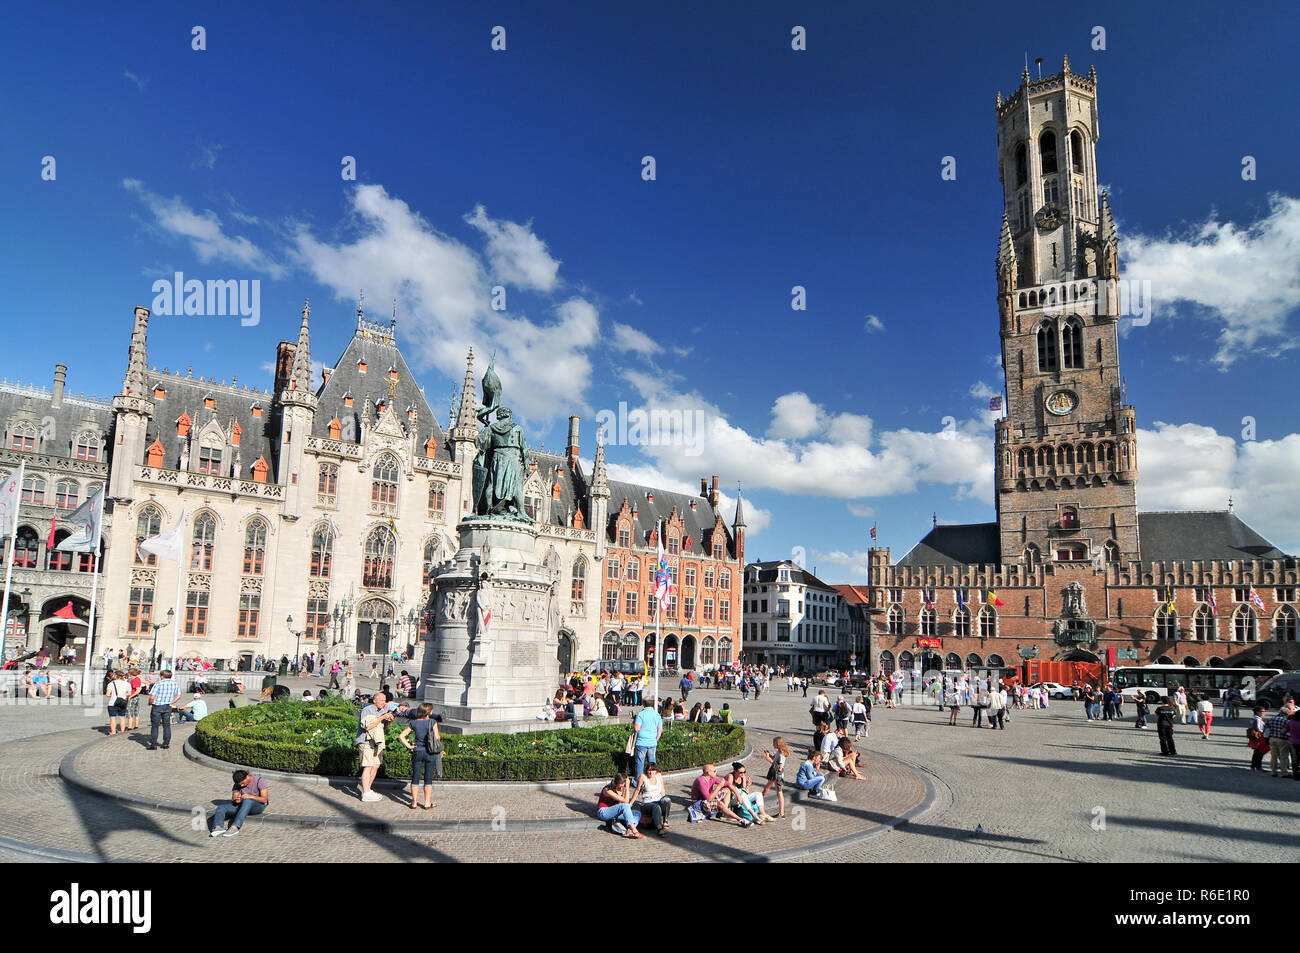 Statue Of Jan Breydel And Pieter De Coninck And Famouse Medieval Belfry Belfort Of Bruges At Grote Markt Square Belgium Stock Photo